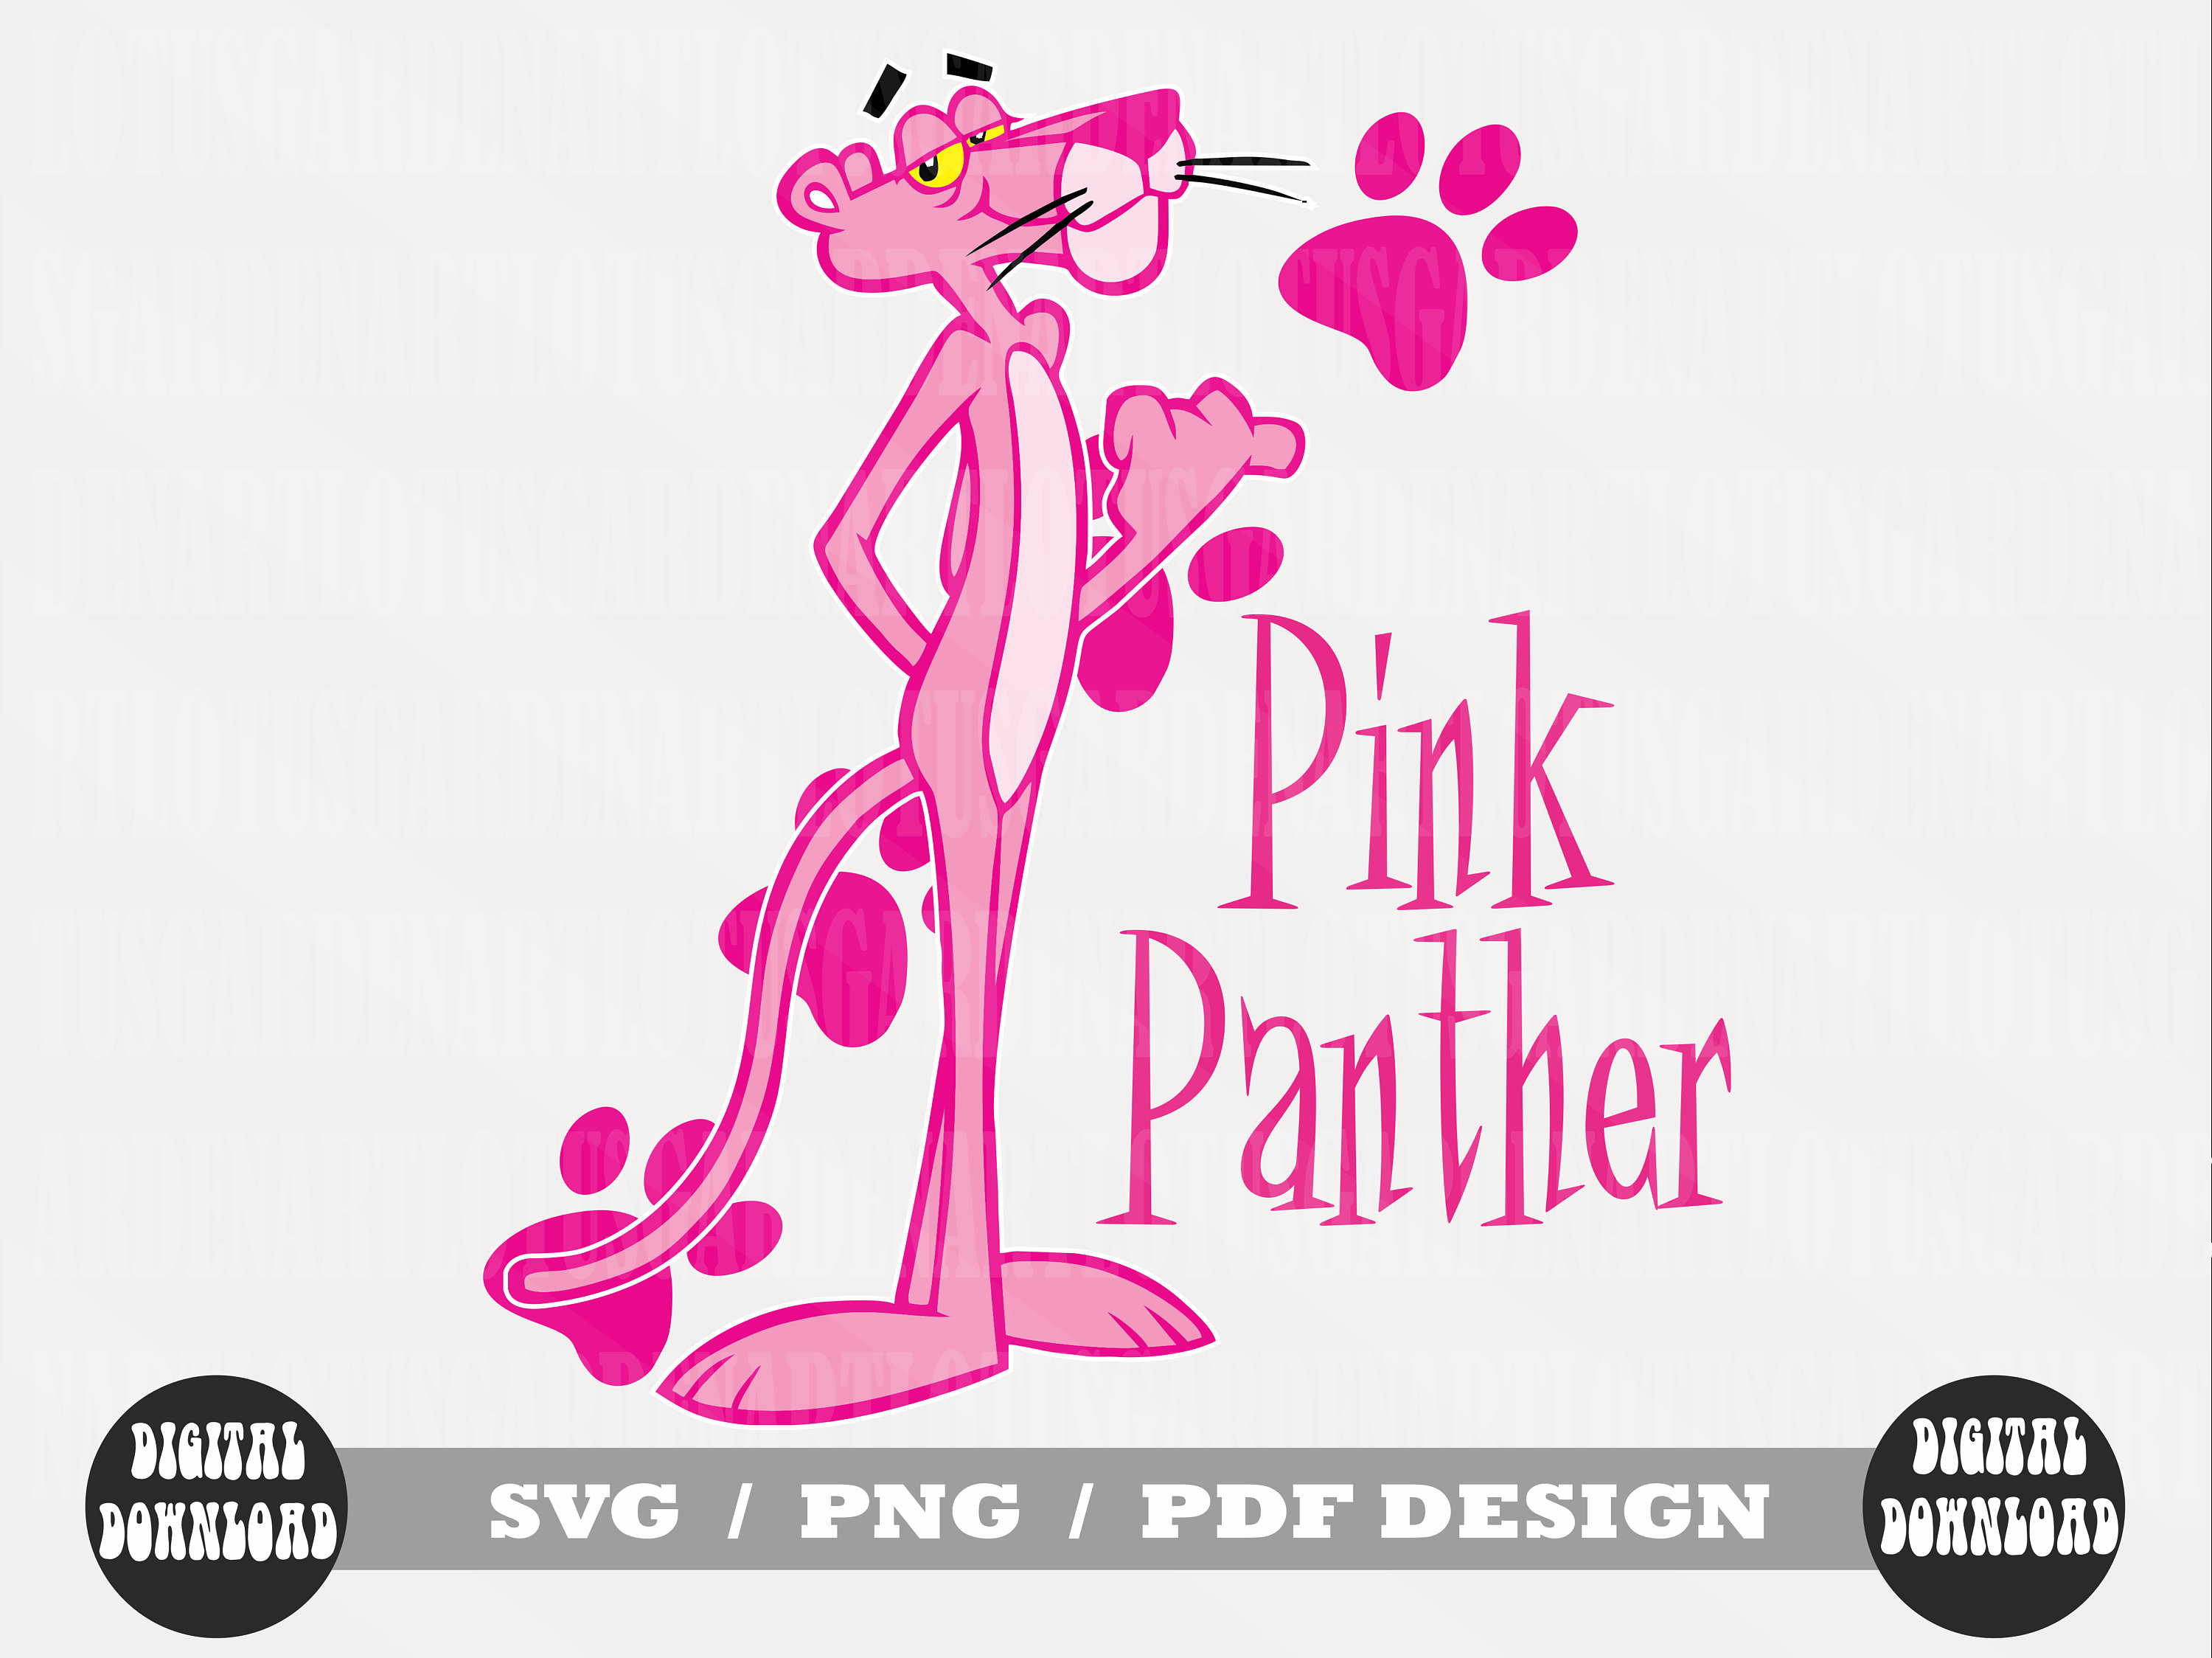 Pink Panther Digital Drawing Download Design Art Printable 